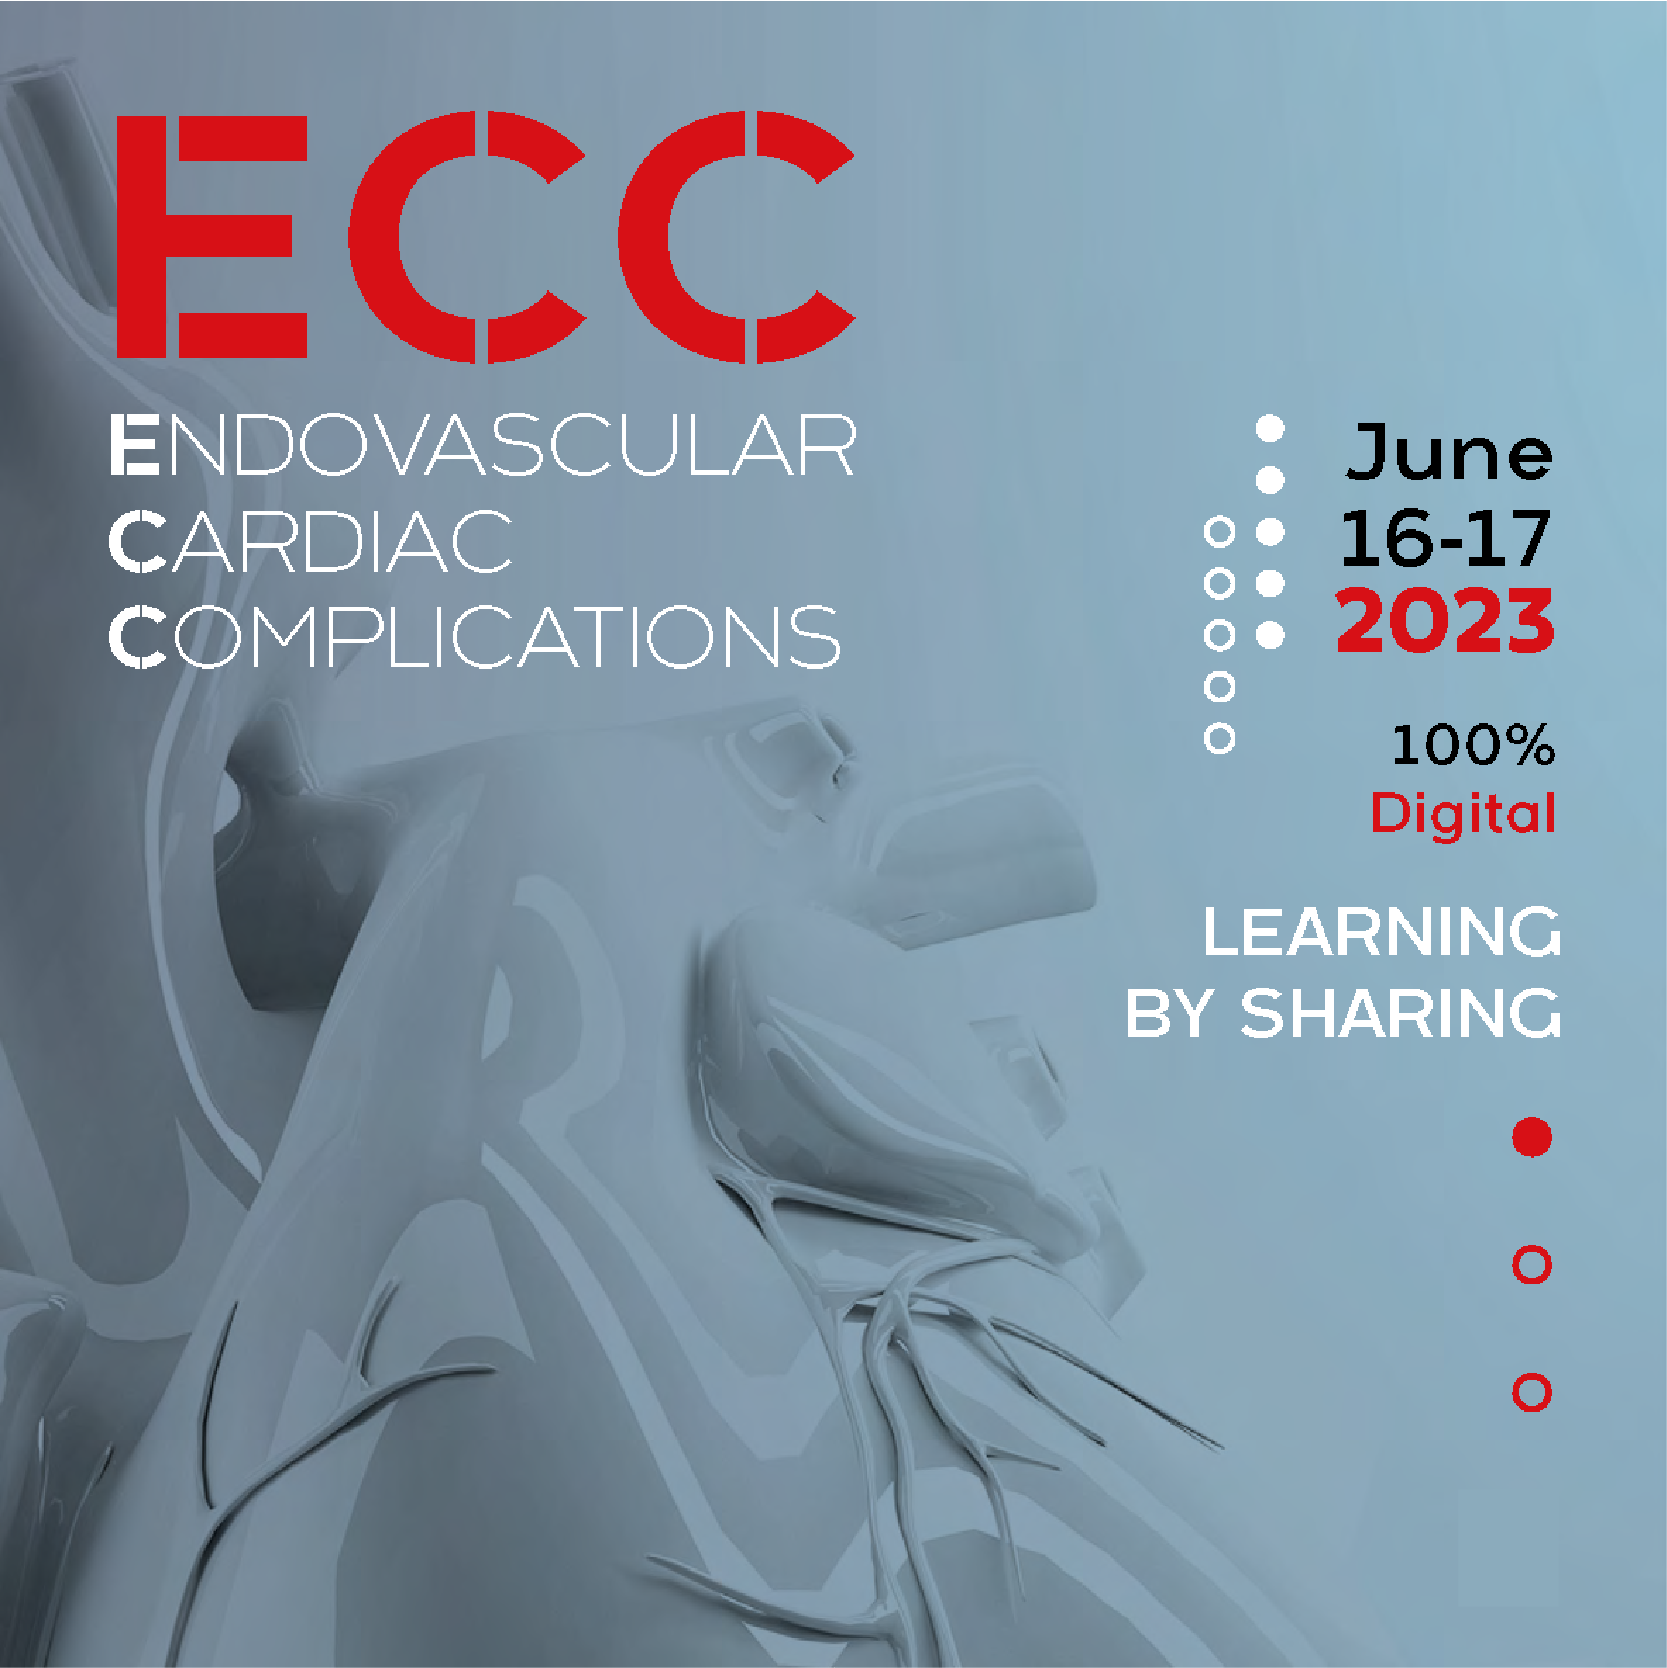 16th edition of Endovascular Cardiac Complications - ECC 2023